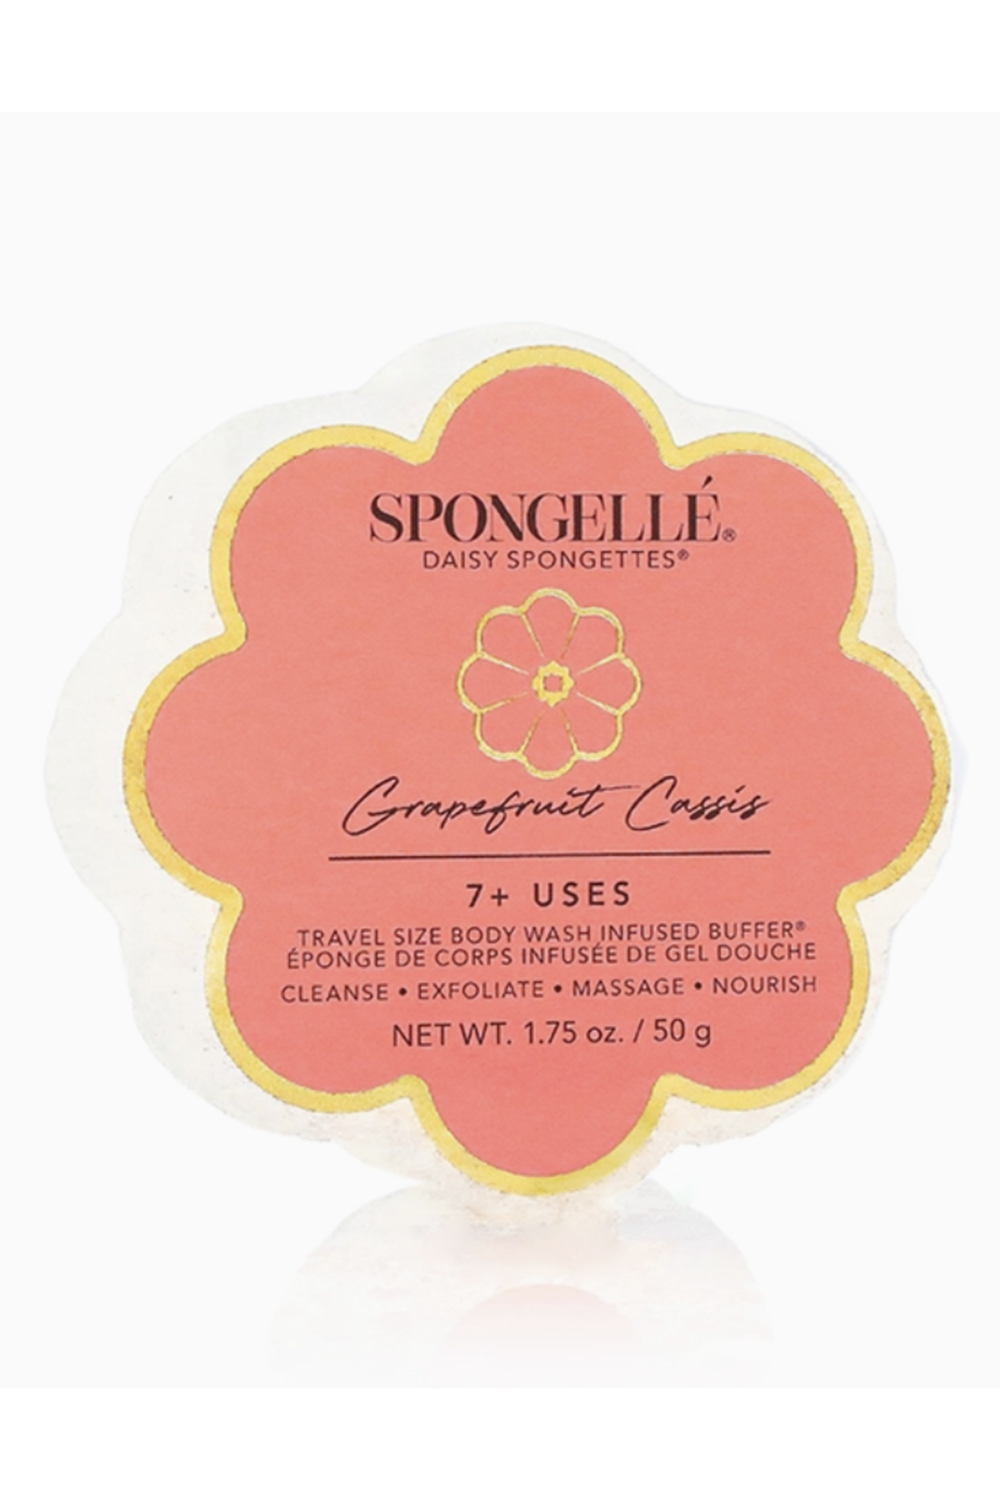 Spongelle Daisy Spongette - grapefruit cassis